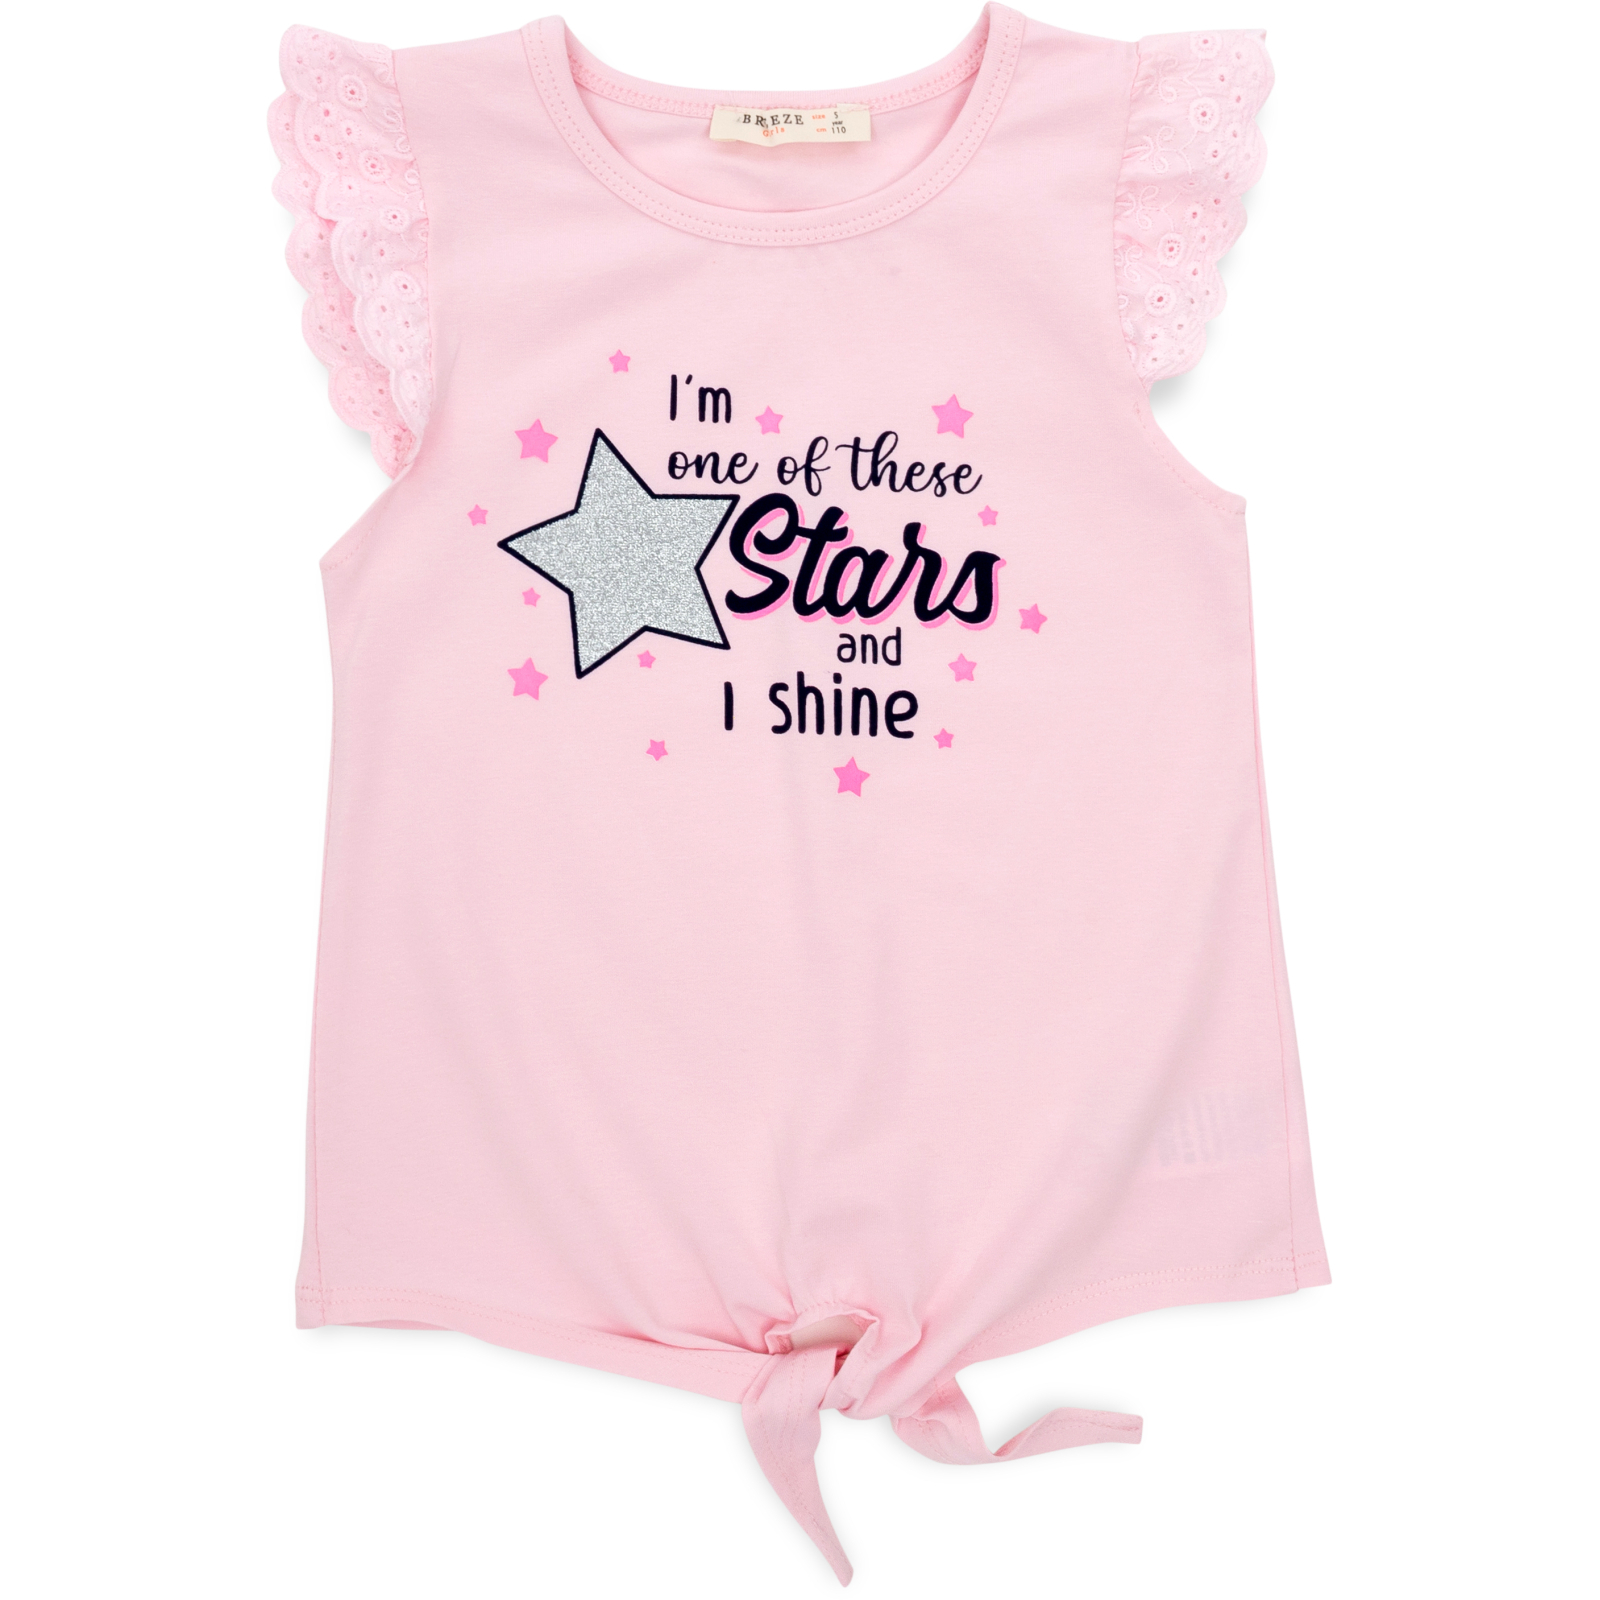 Футболка детская Breeze STARS (17109-140G-pink)